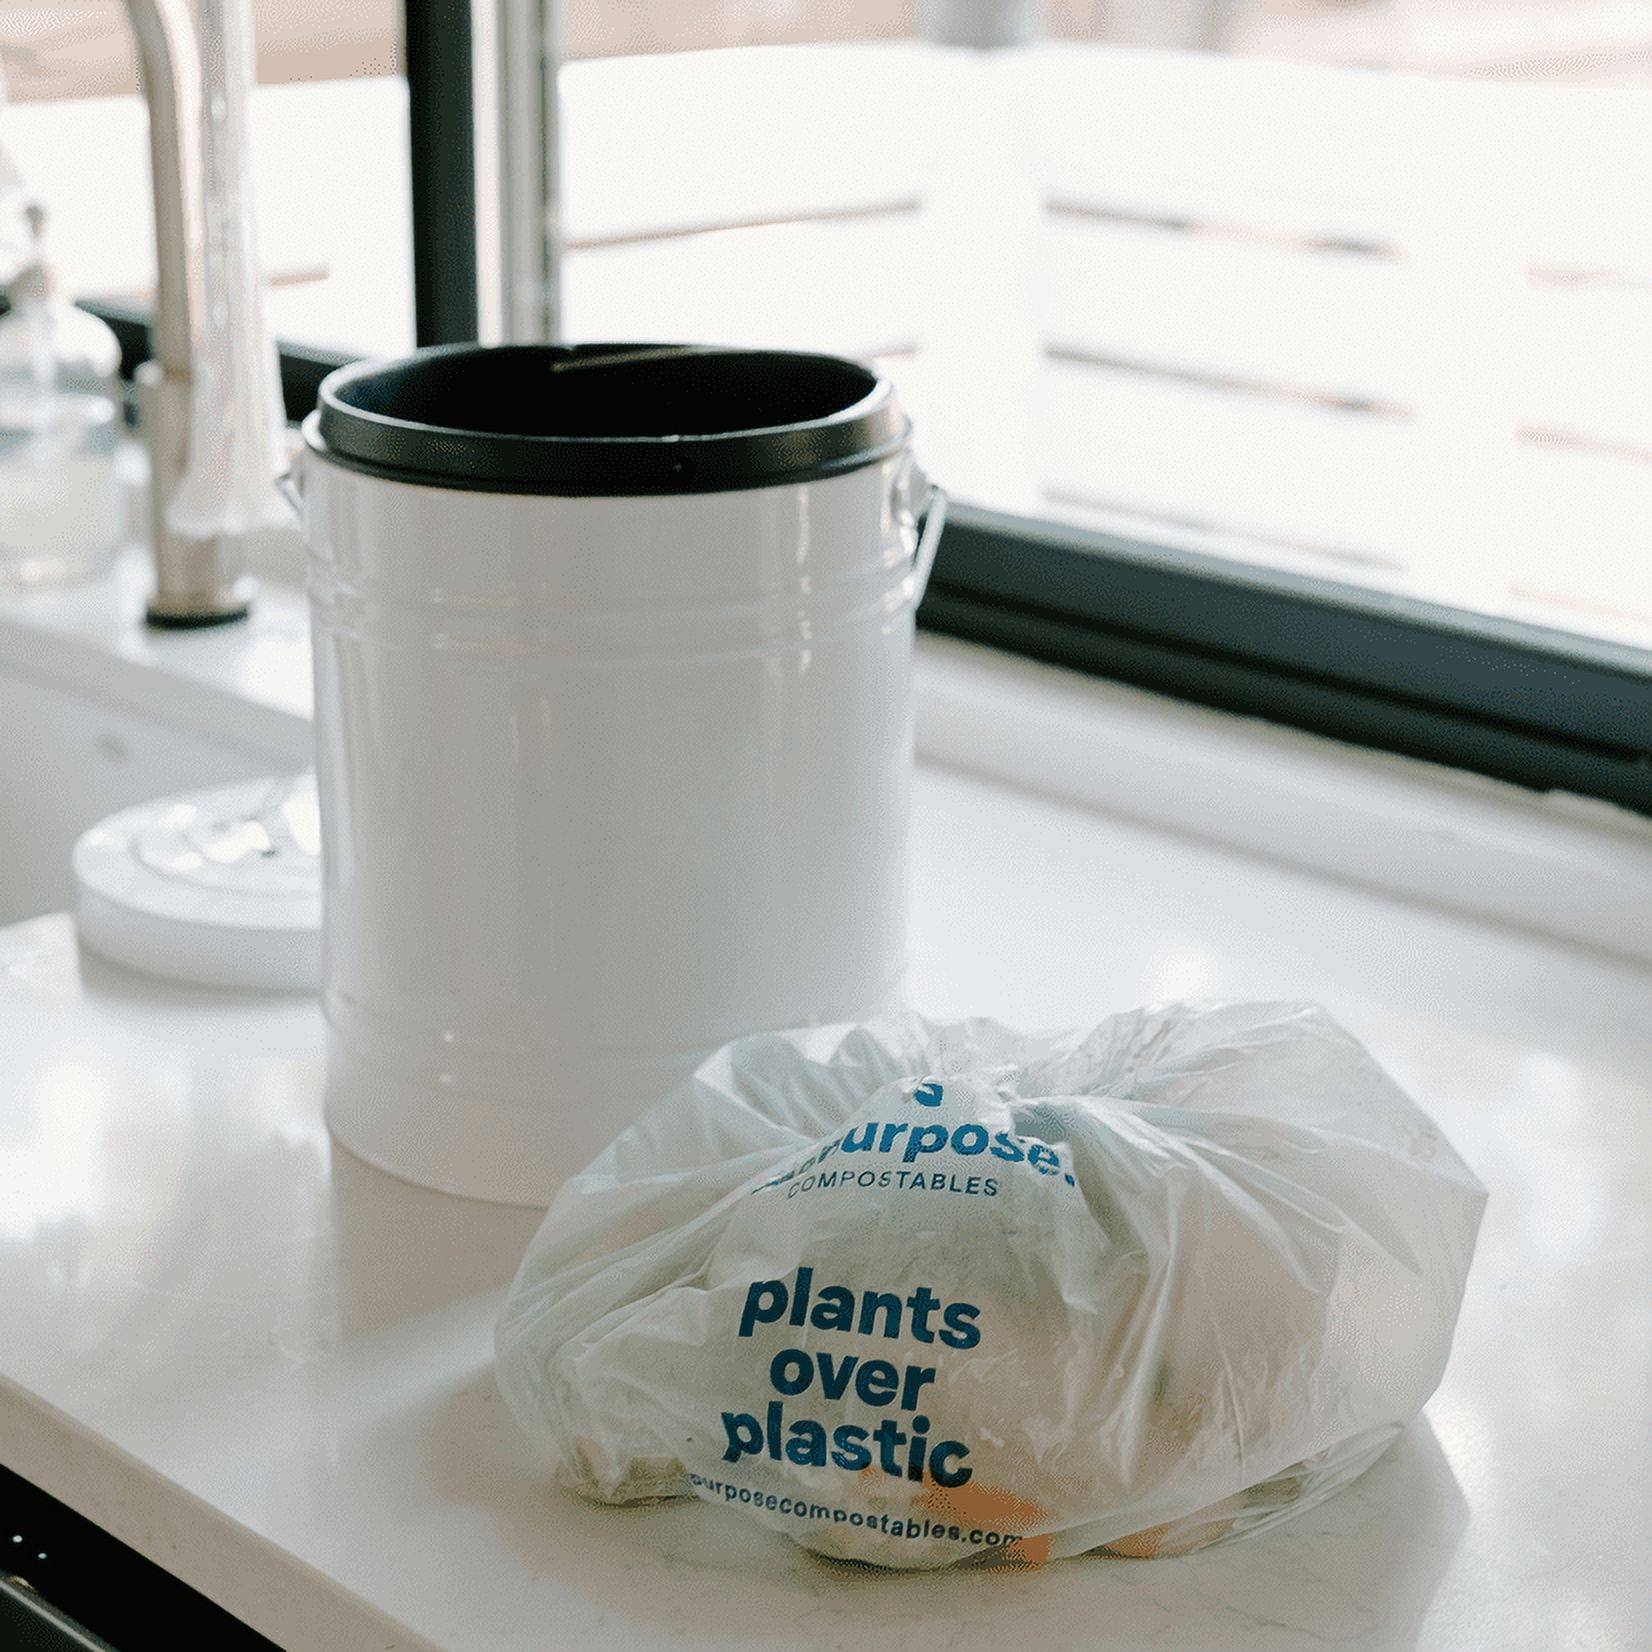 Toplive Trash Bag ,8 Gallon 60 Count Garbage Bag Biodegradable Compostable  1.5 Mil Thickness Trash Bags Wastebasket Bin Liners for Home Bathroom